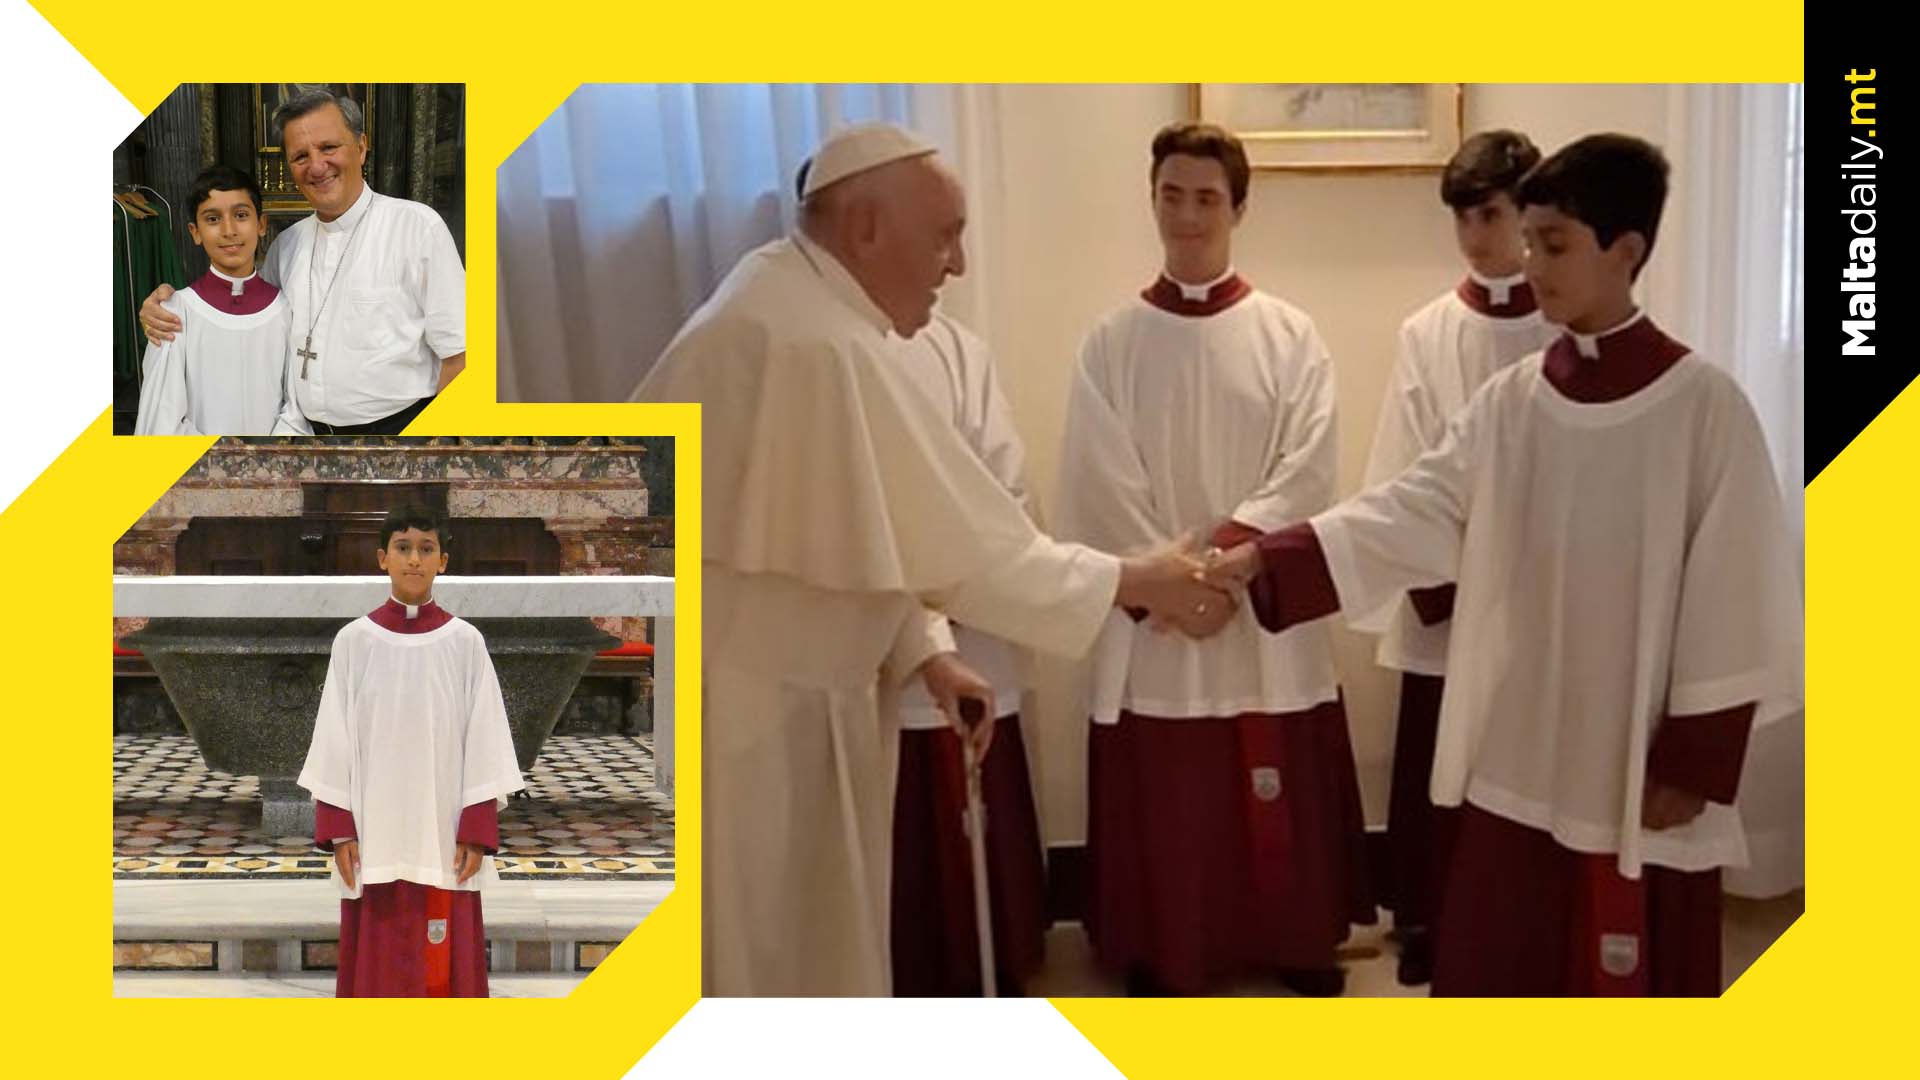 Local Altar Boy Meets Pope Francis In Vatican Trip